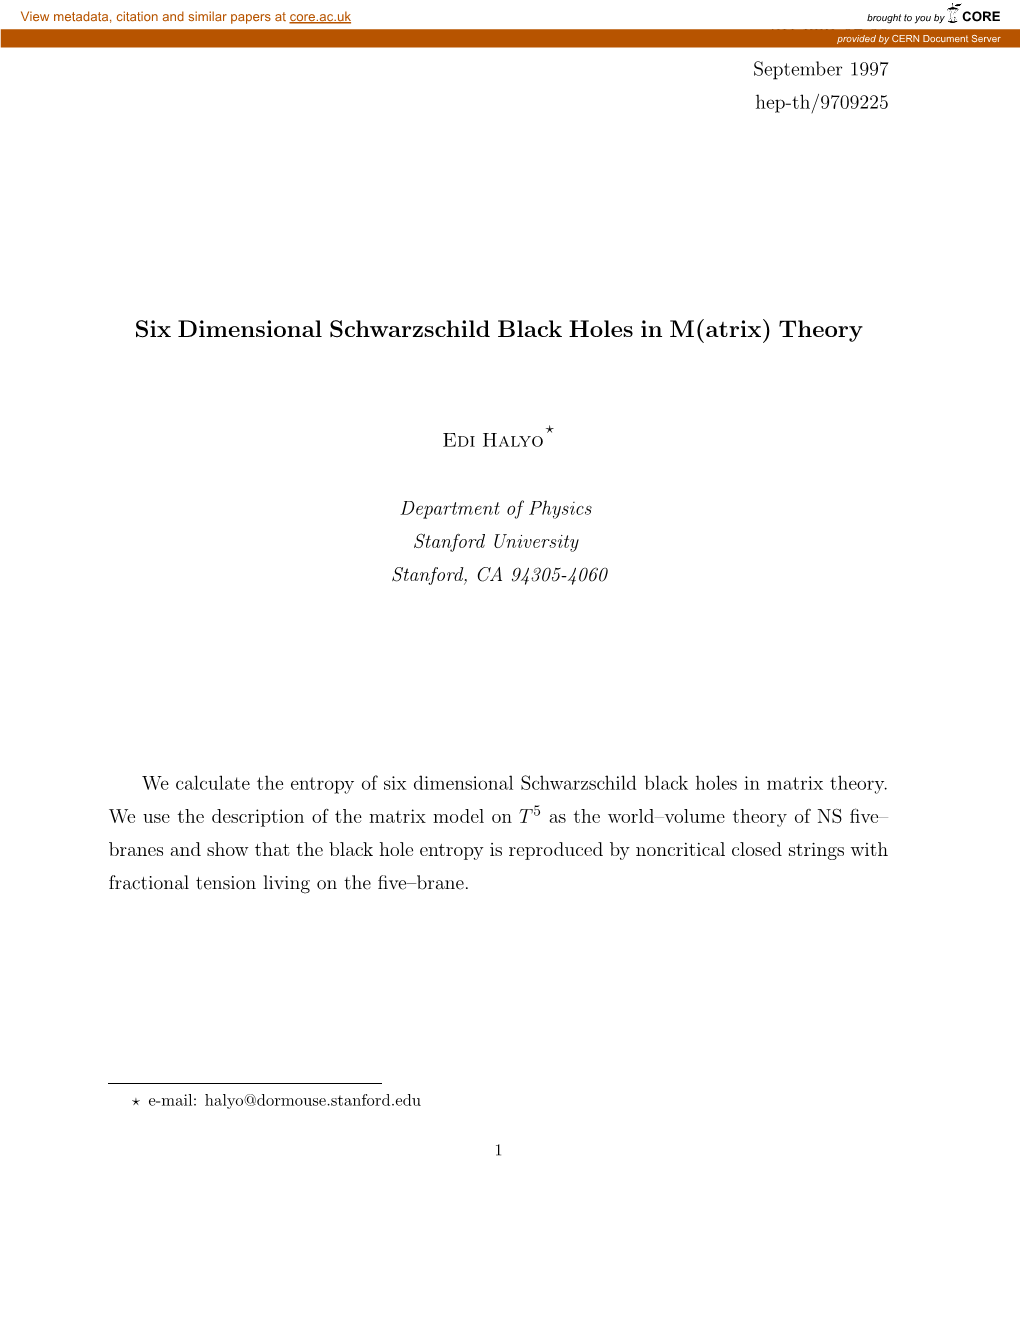 Six Dimensional Schwarzschild Black Holes in M(Atrix) Theory